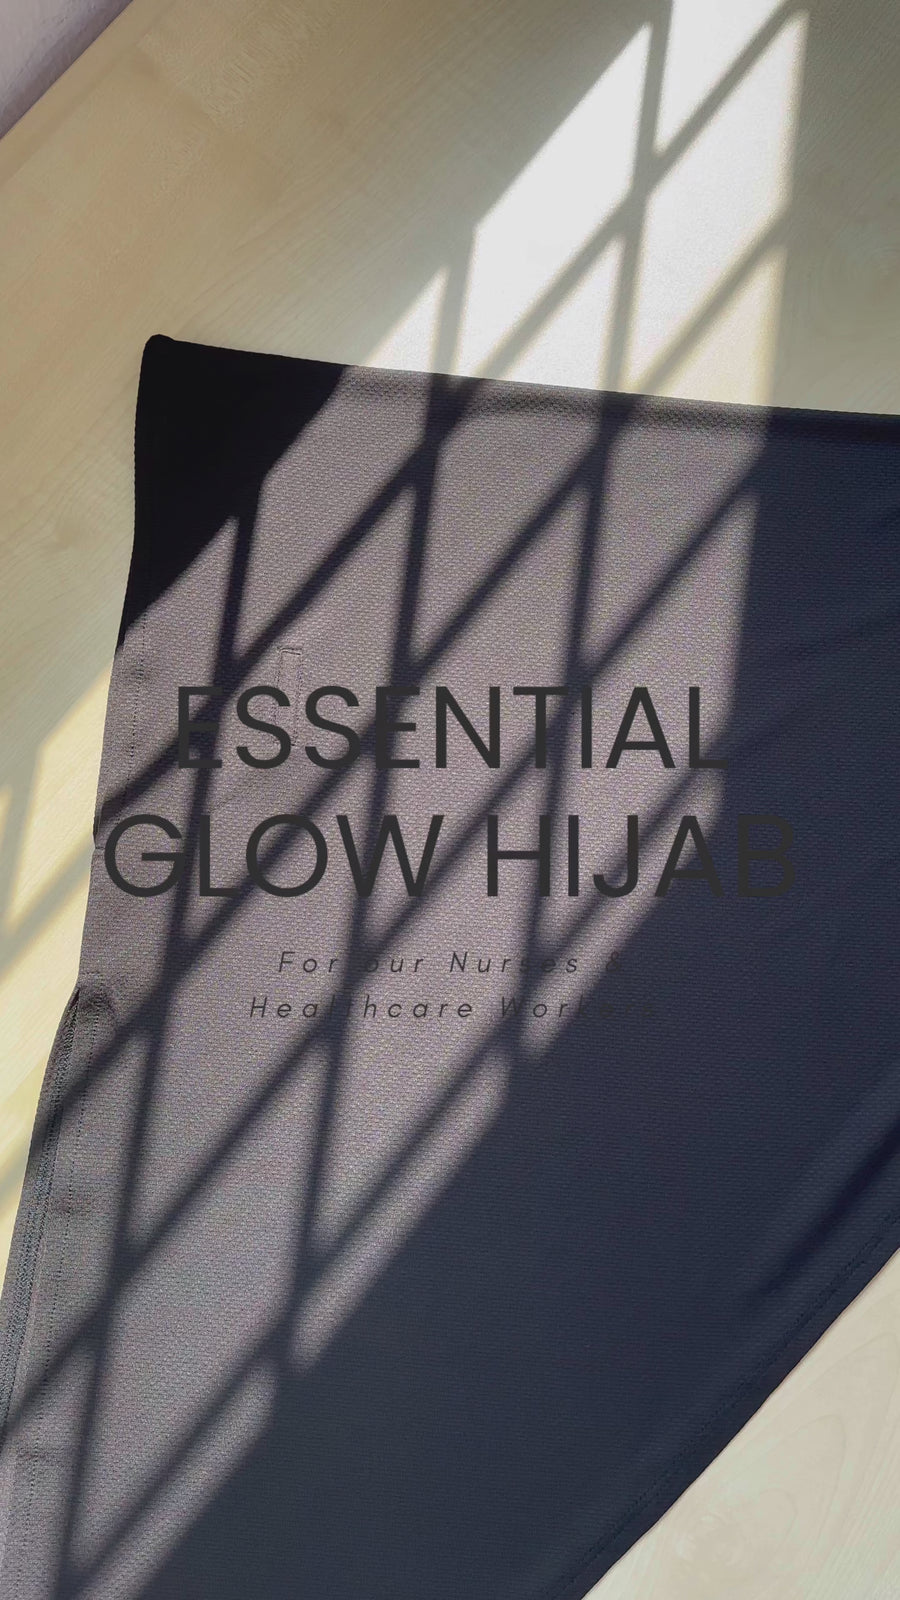 Essential Glow Hijab in Black